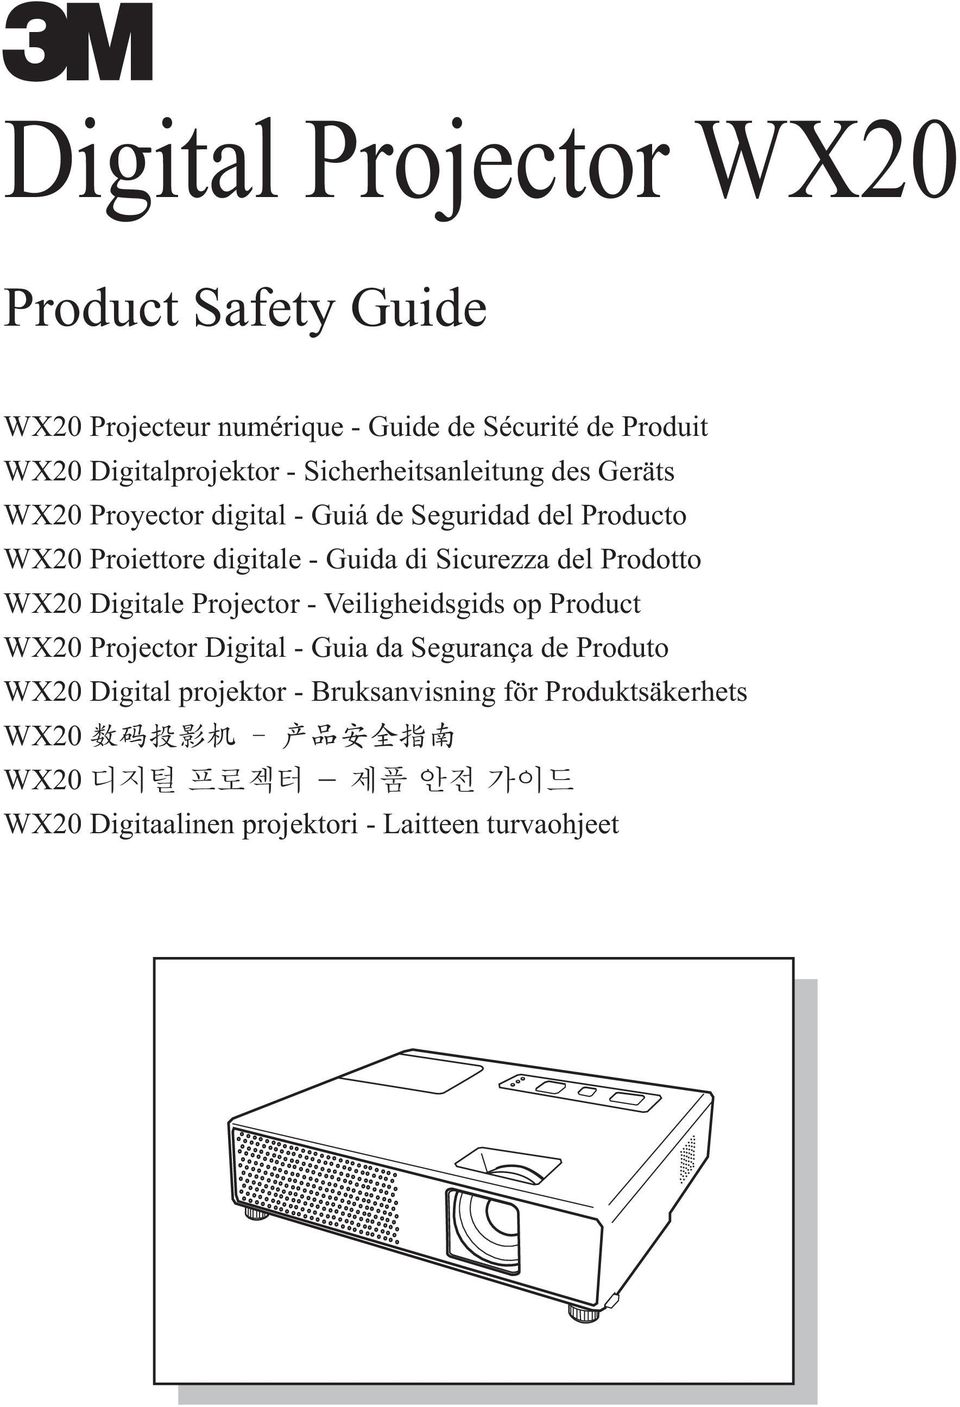 Sicurezza del Prodotto WX20 Digitale Projector - Veiligheidsgids op Product WX20 Projector Digital - Guia da Segurança de